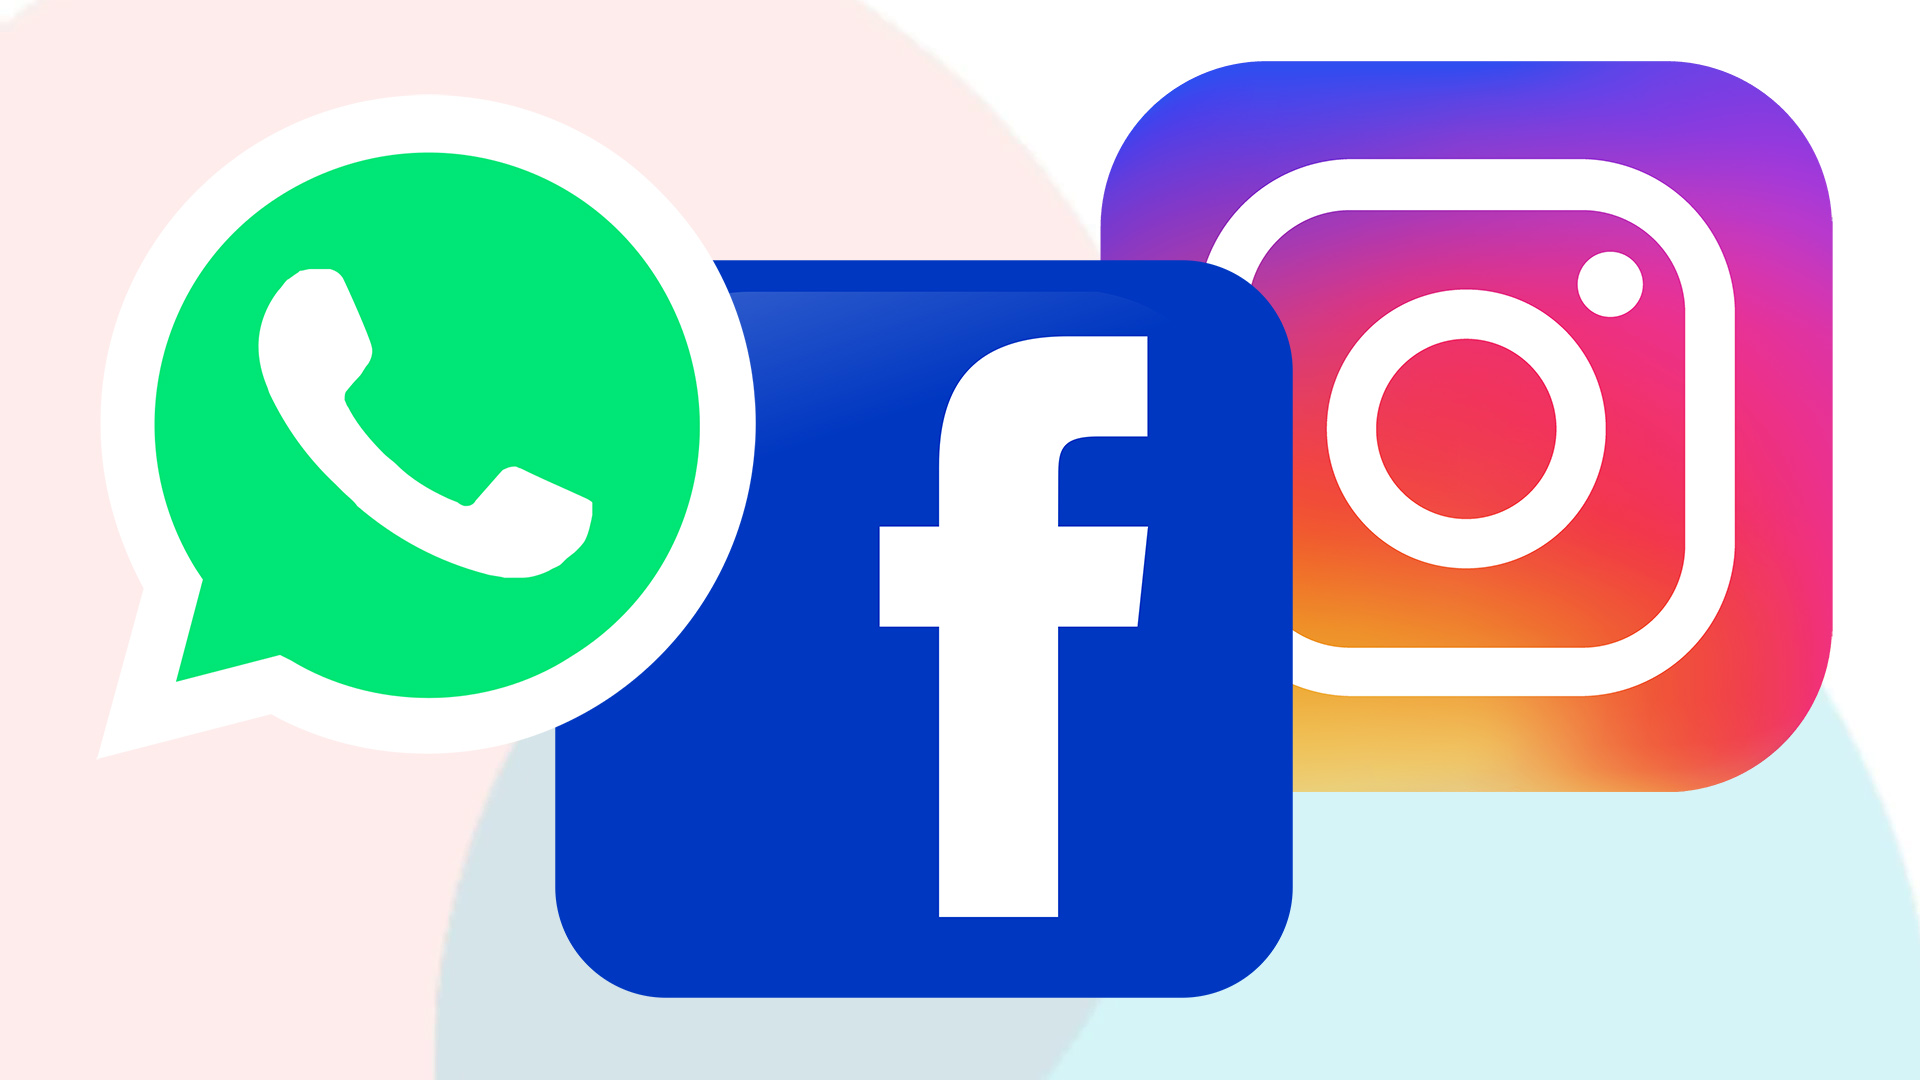 WhatsApp Facebook Instagram Logos Wallpapers - Wallpaper Cave